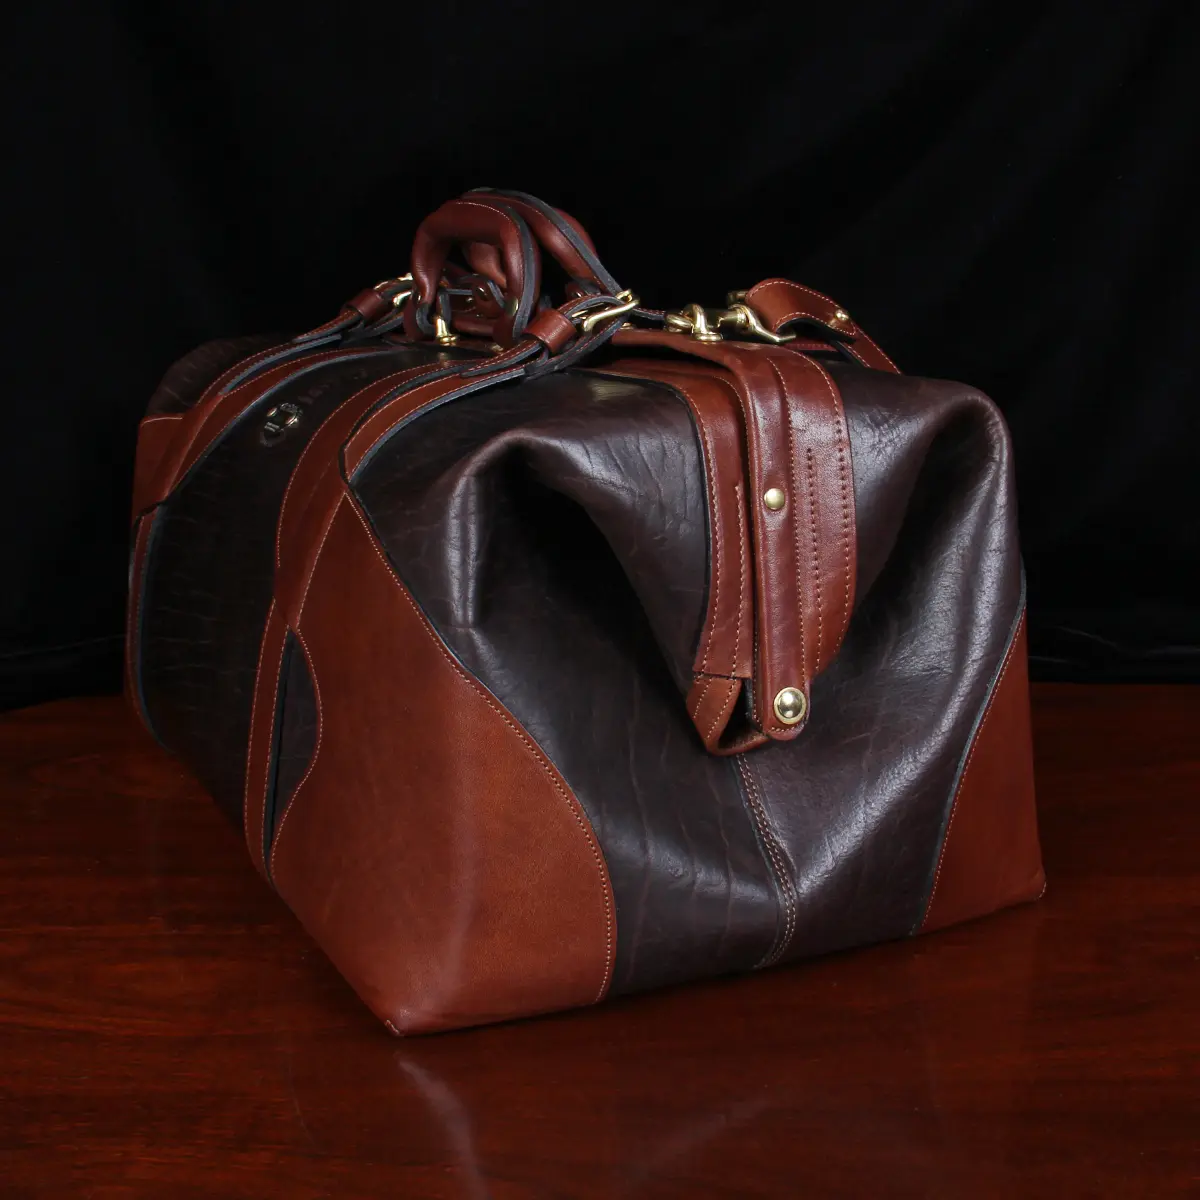 Buffalo Leather Duffle, No. 5 Grip Travel Bag - USA Made